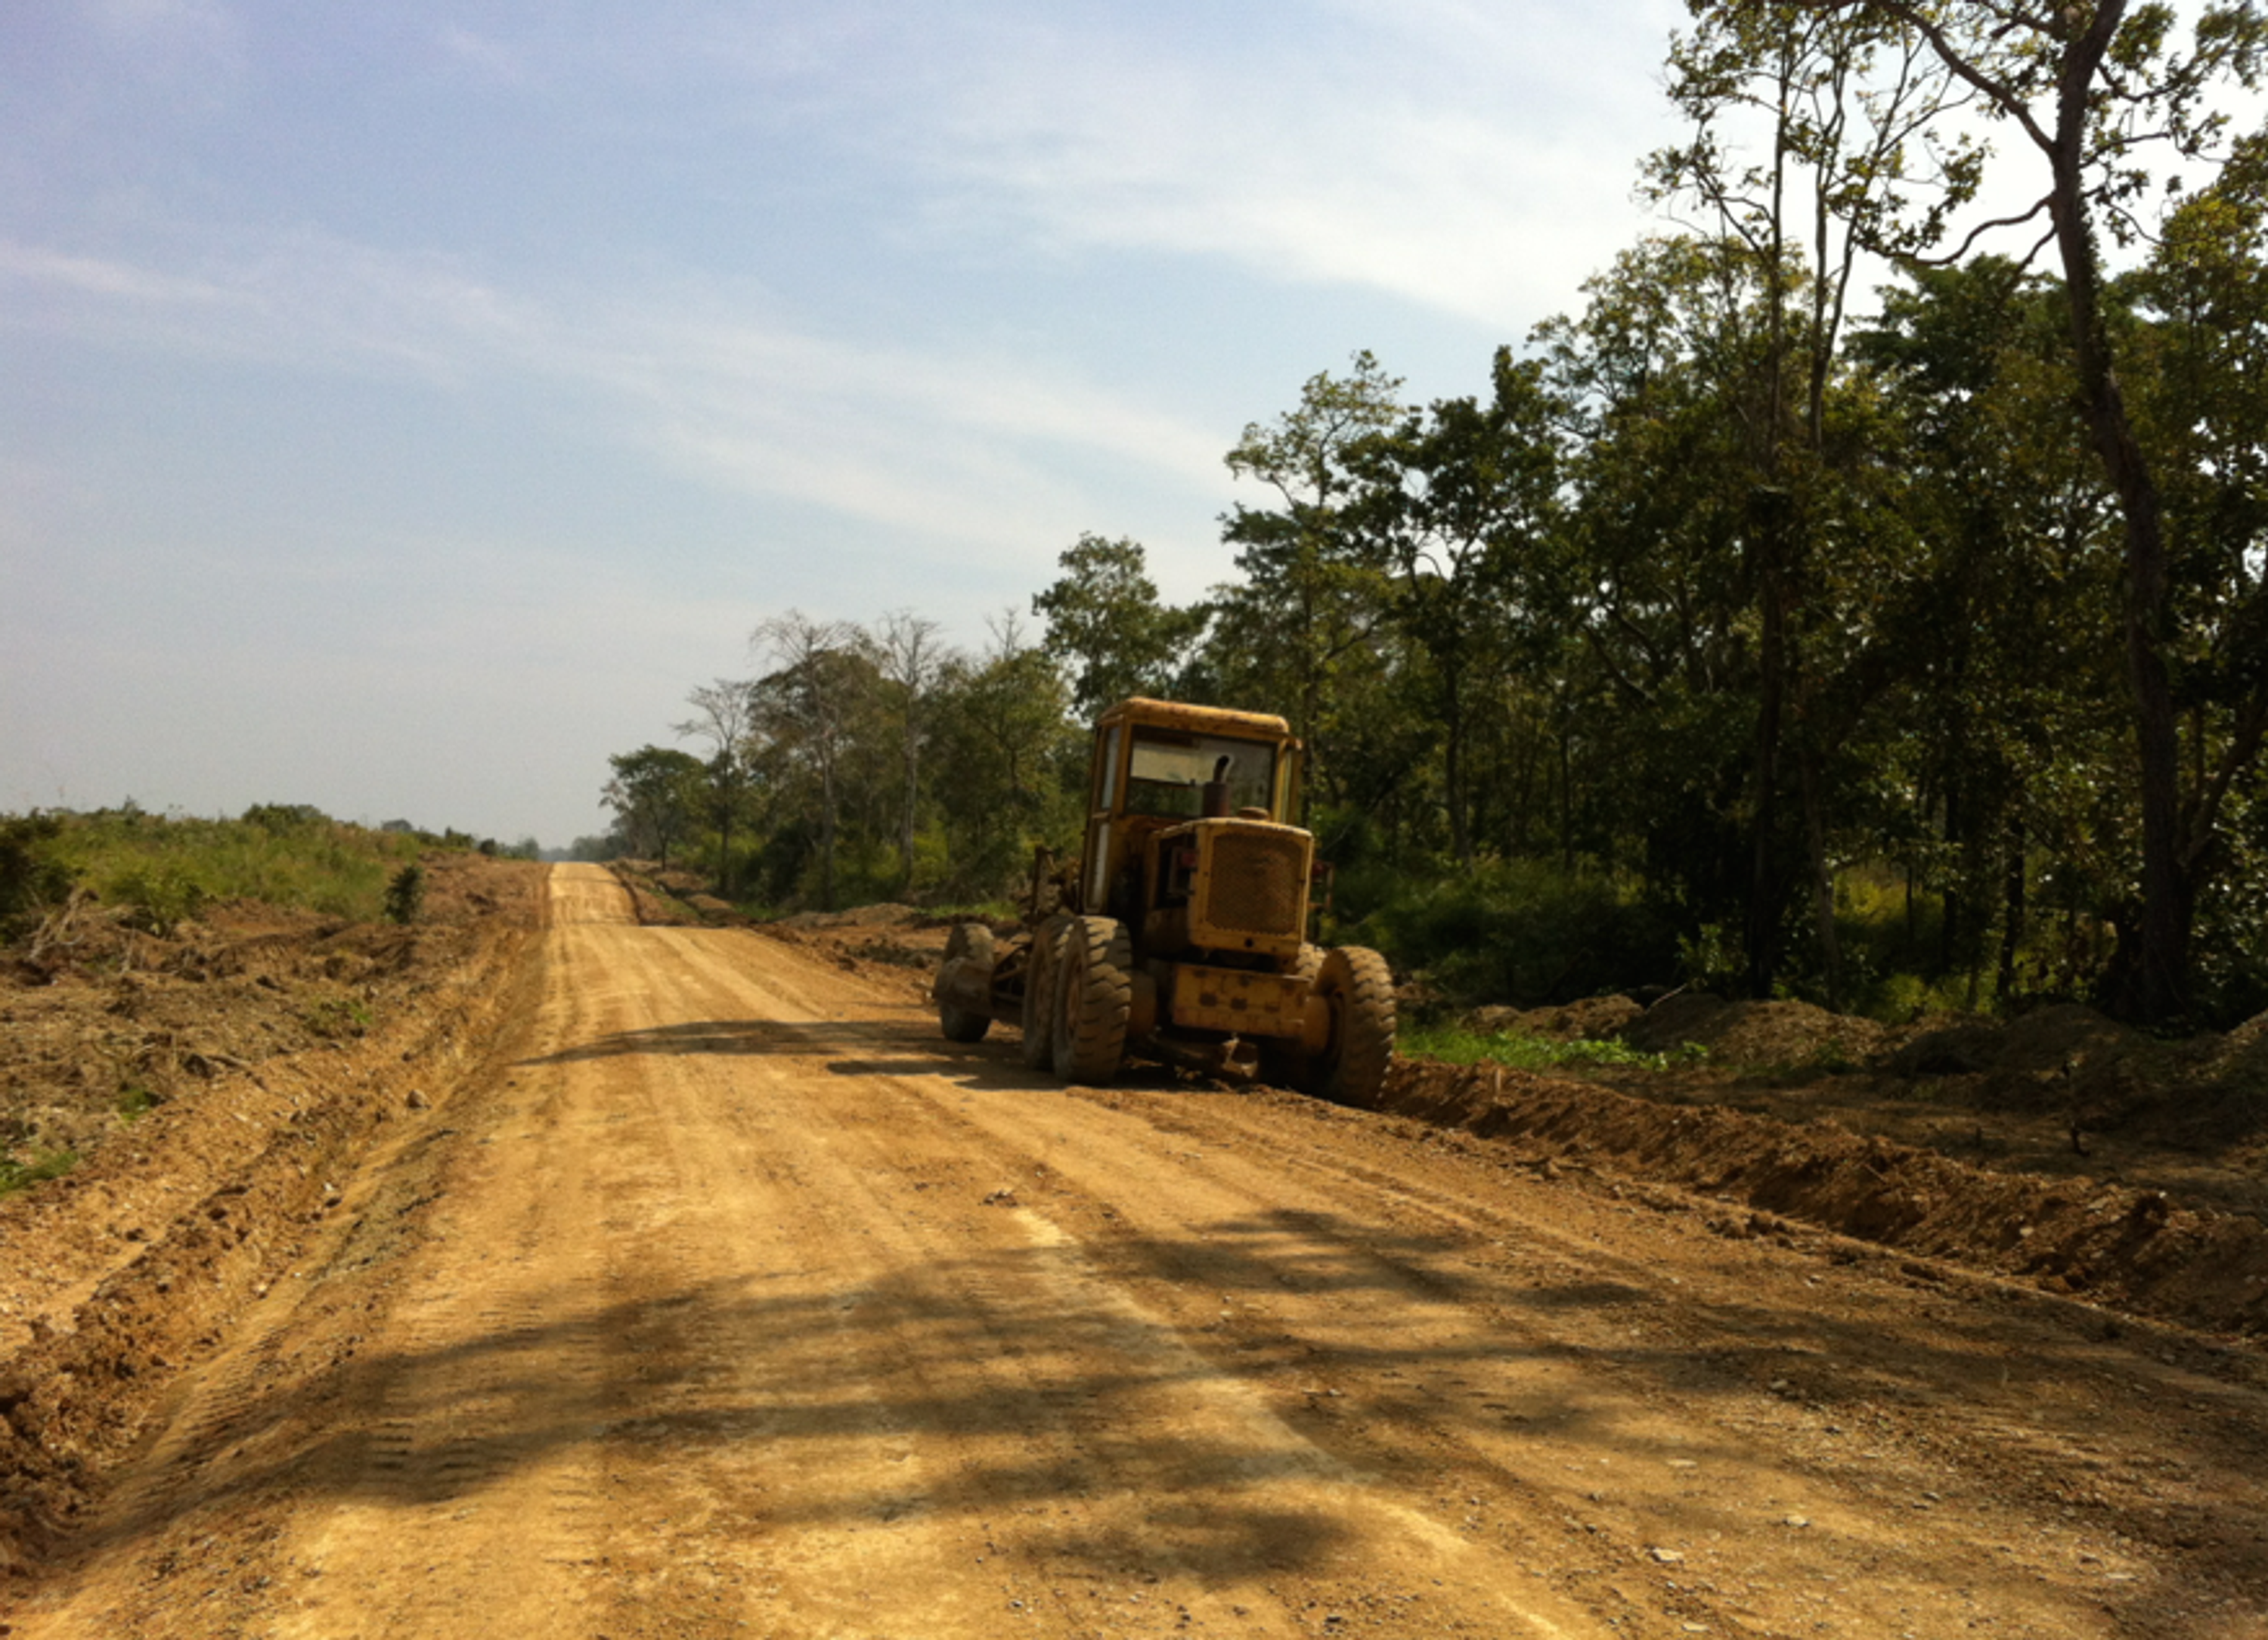 New roads being built